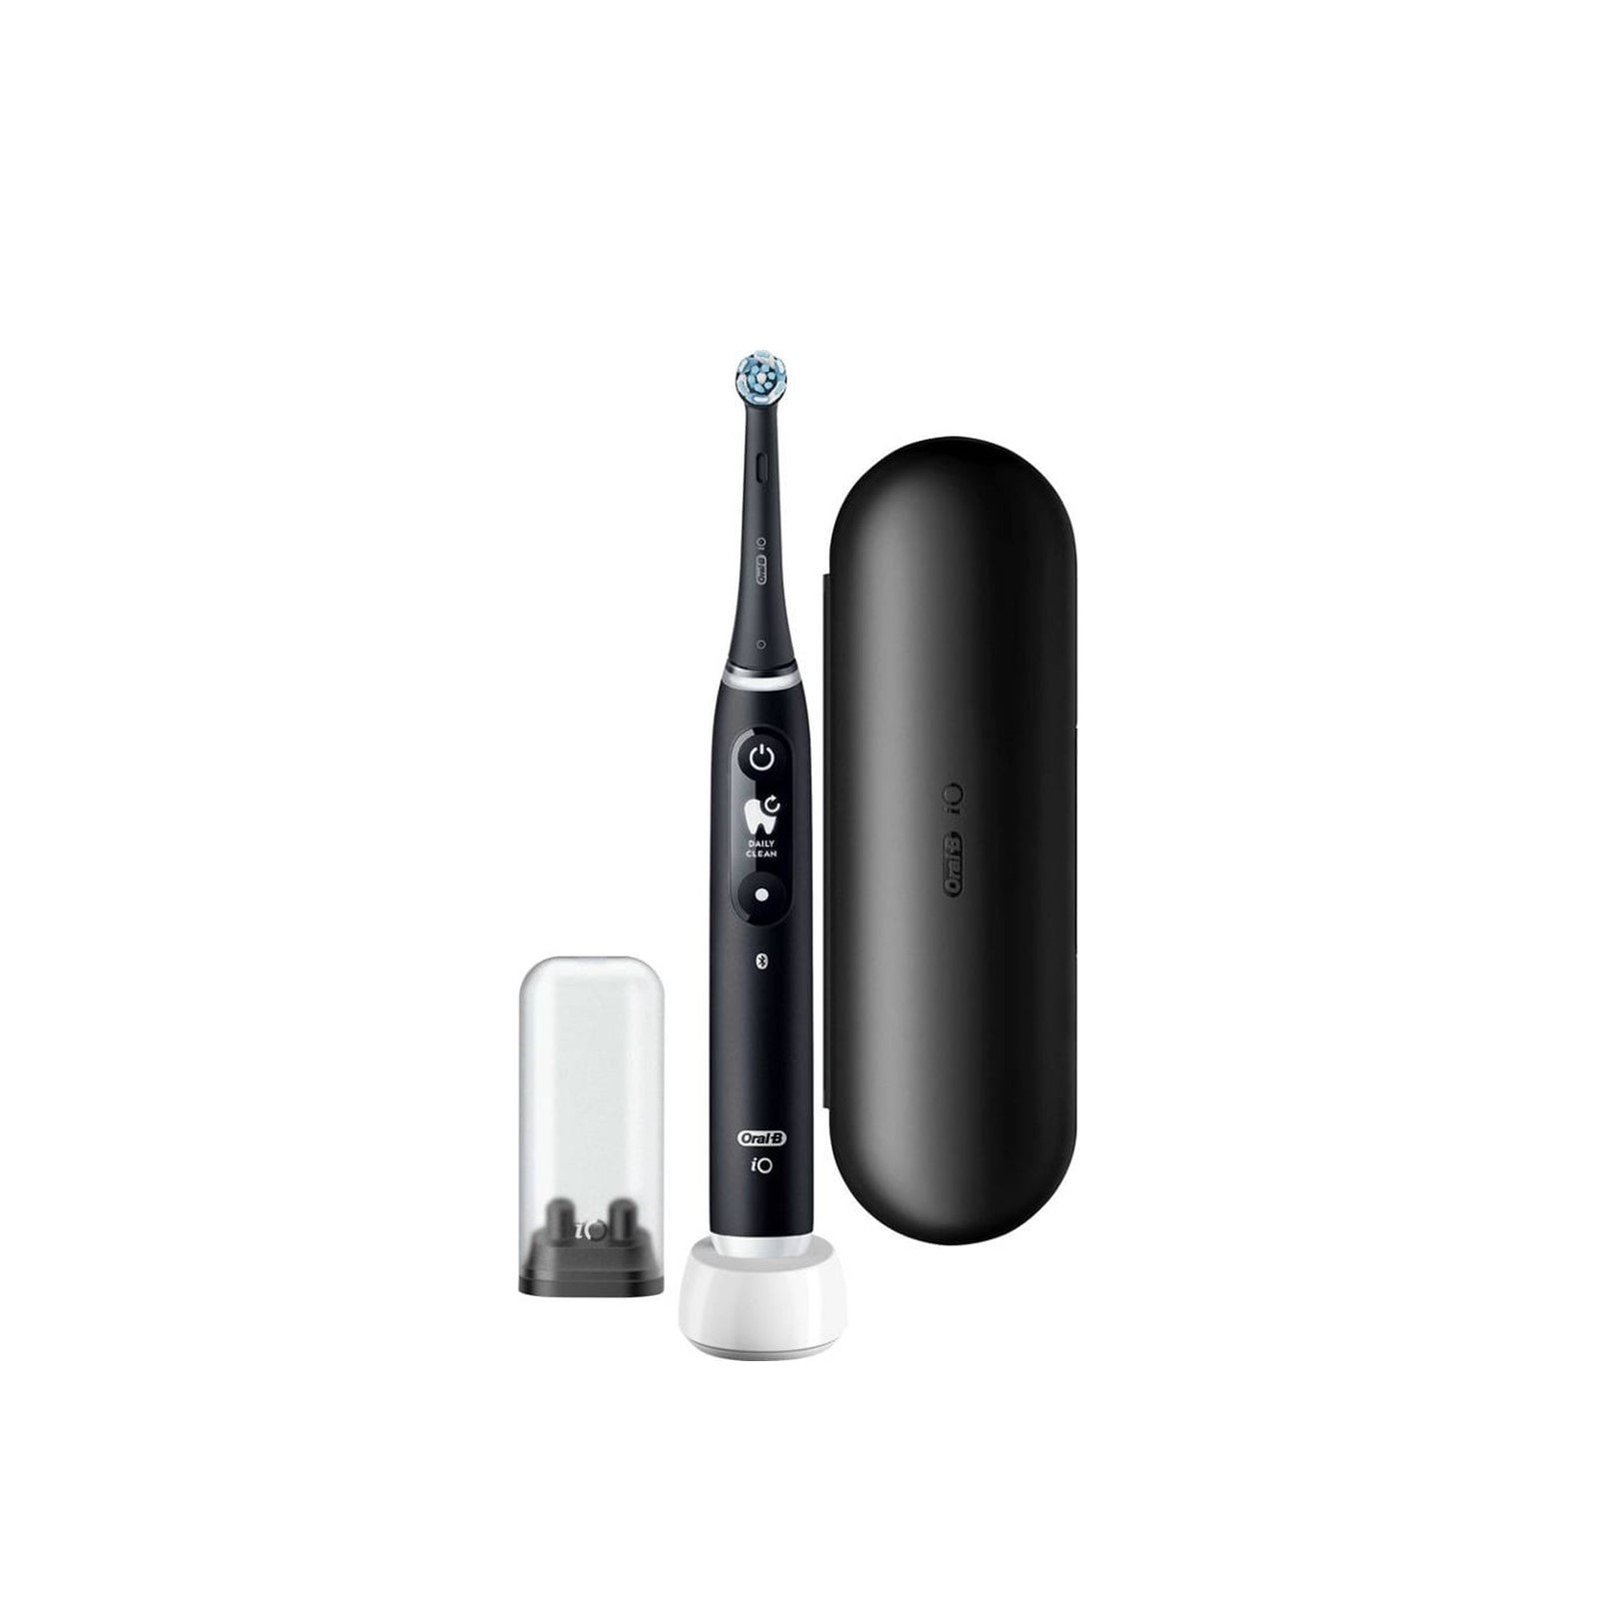 Oral-B iO Series 5 Electric Toothbrush Black